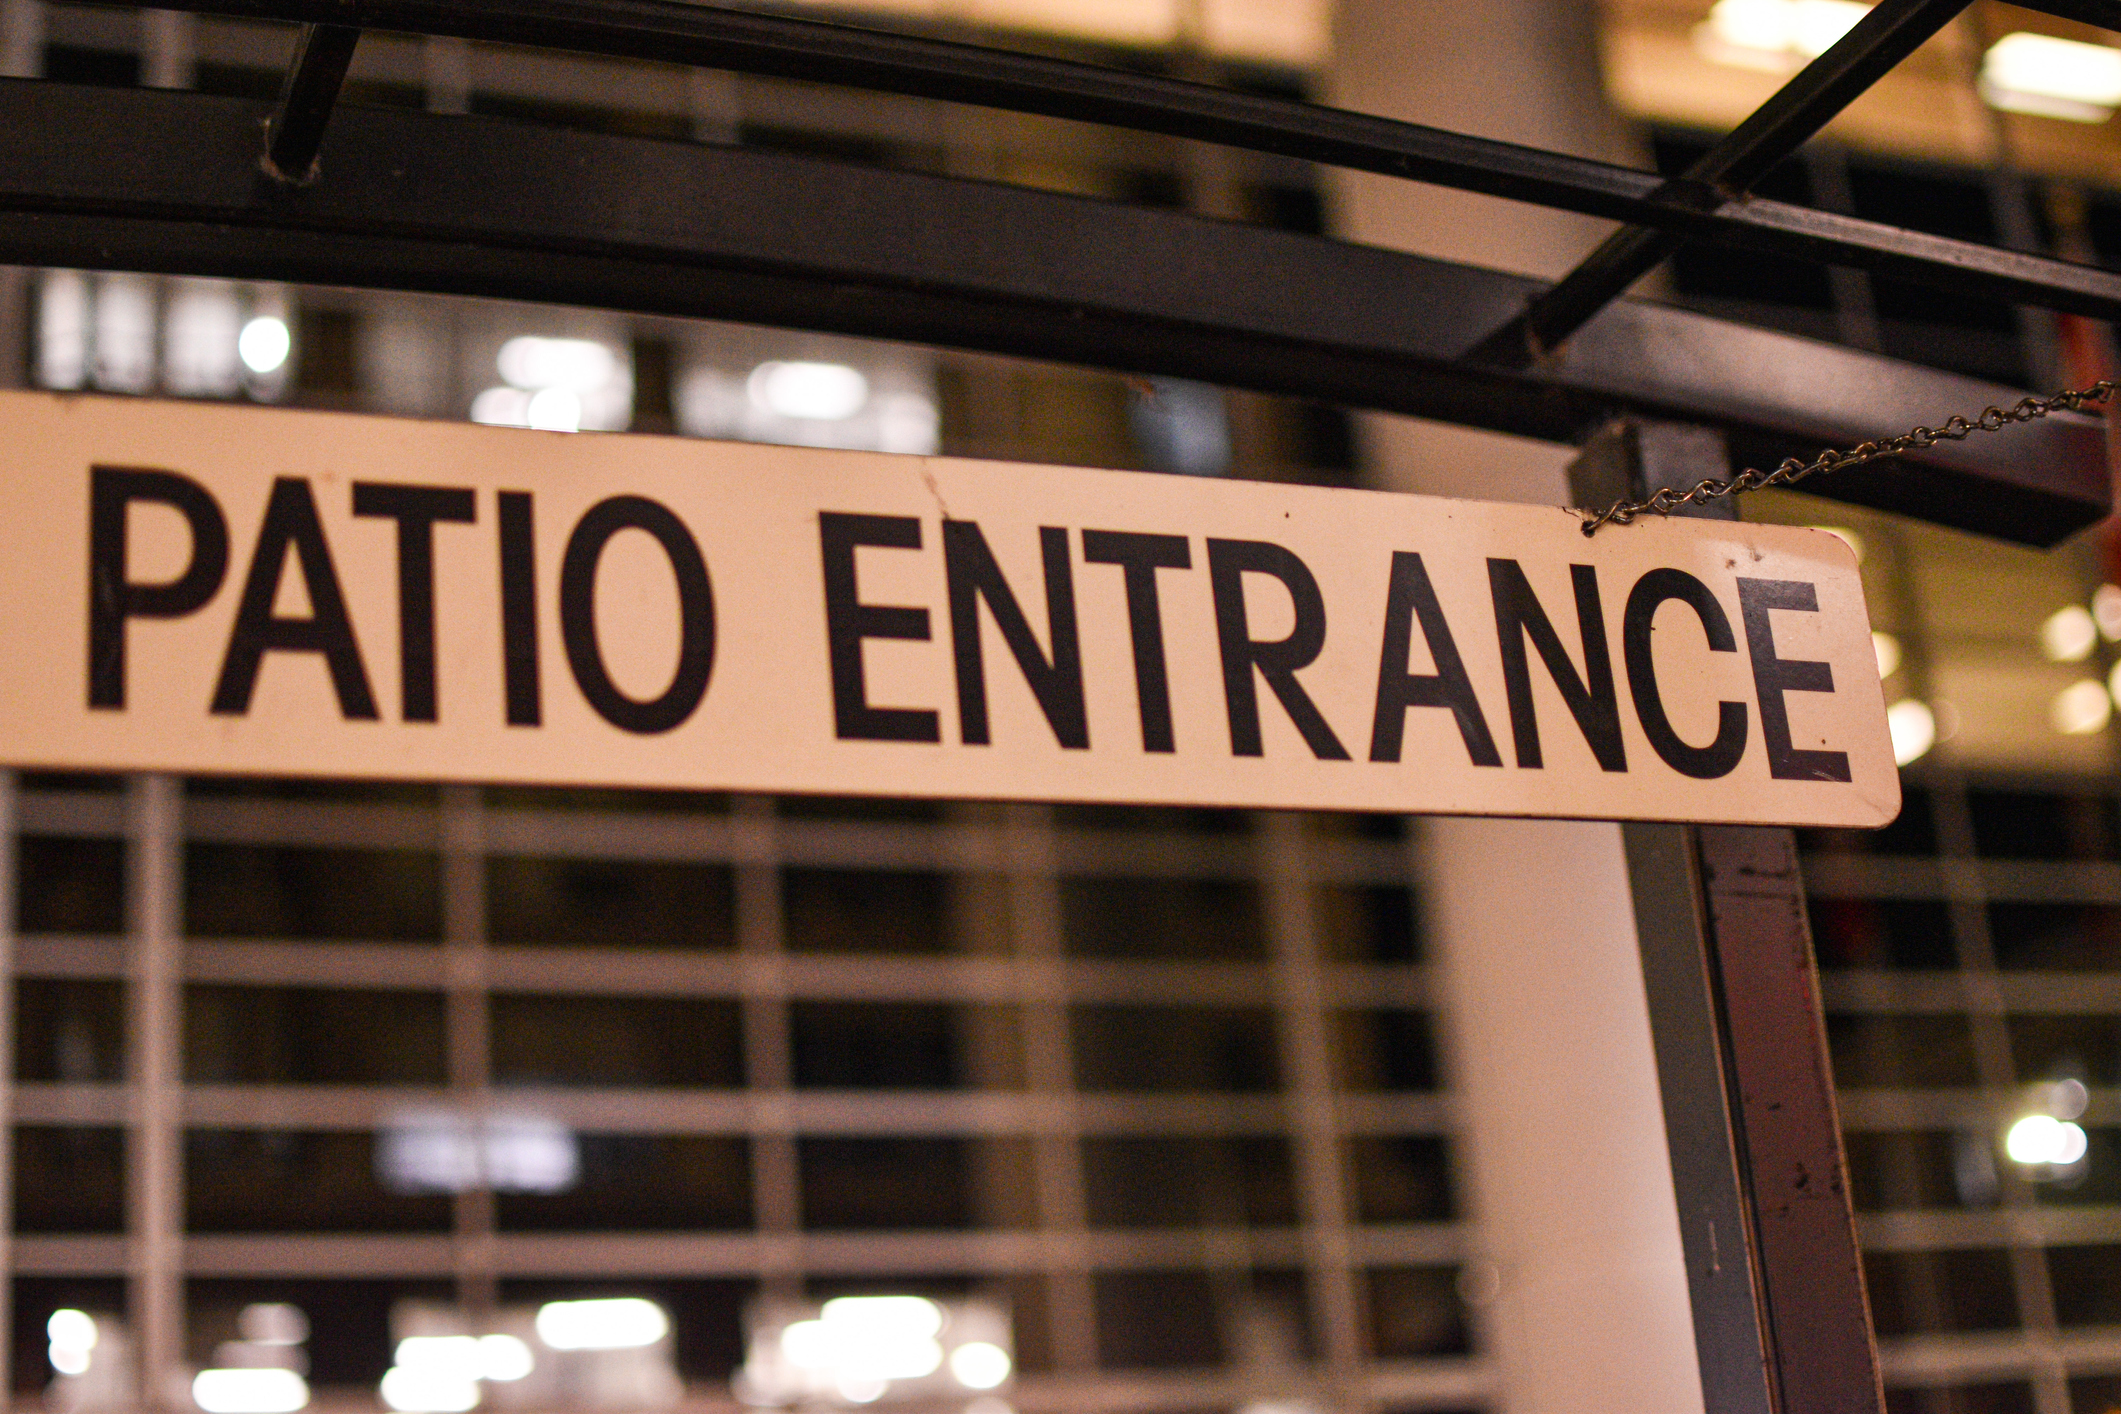 Patio entrance sign